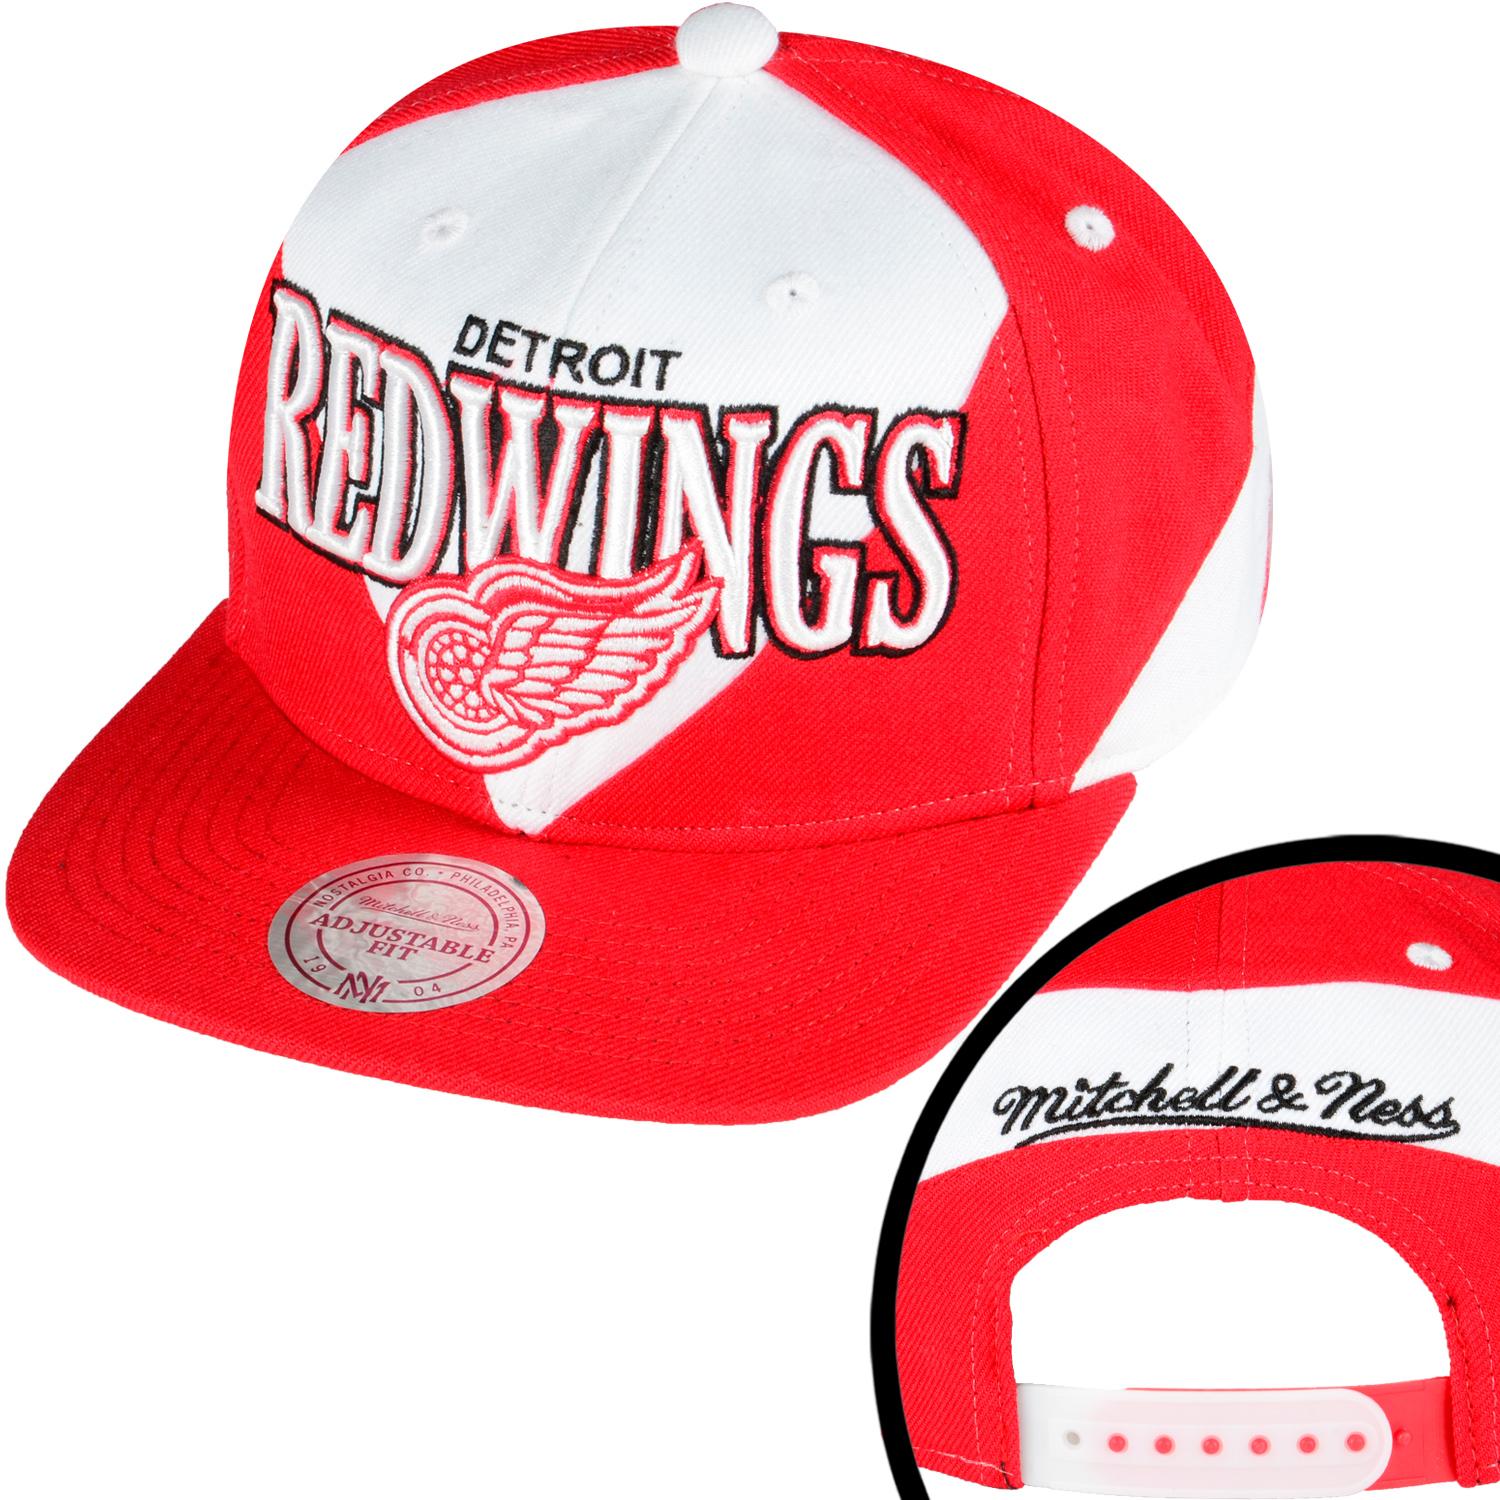 Foto Mitchell & Ness Tripanel Detroit Red Wings Hombres Snapback Cap Roj...